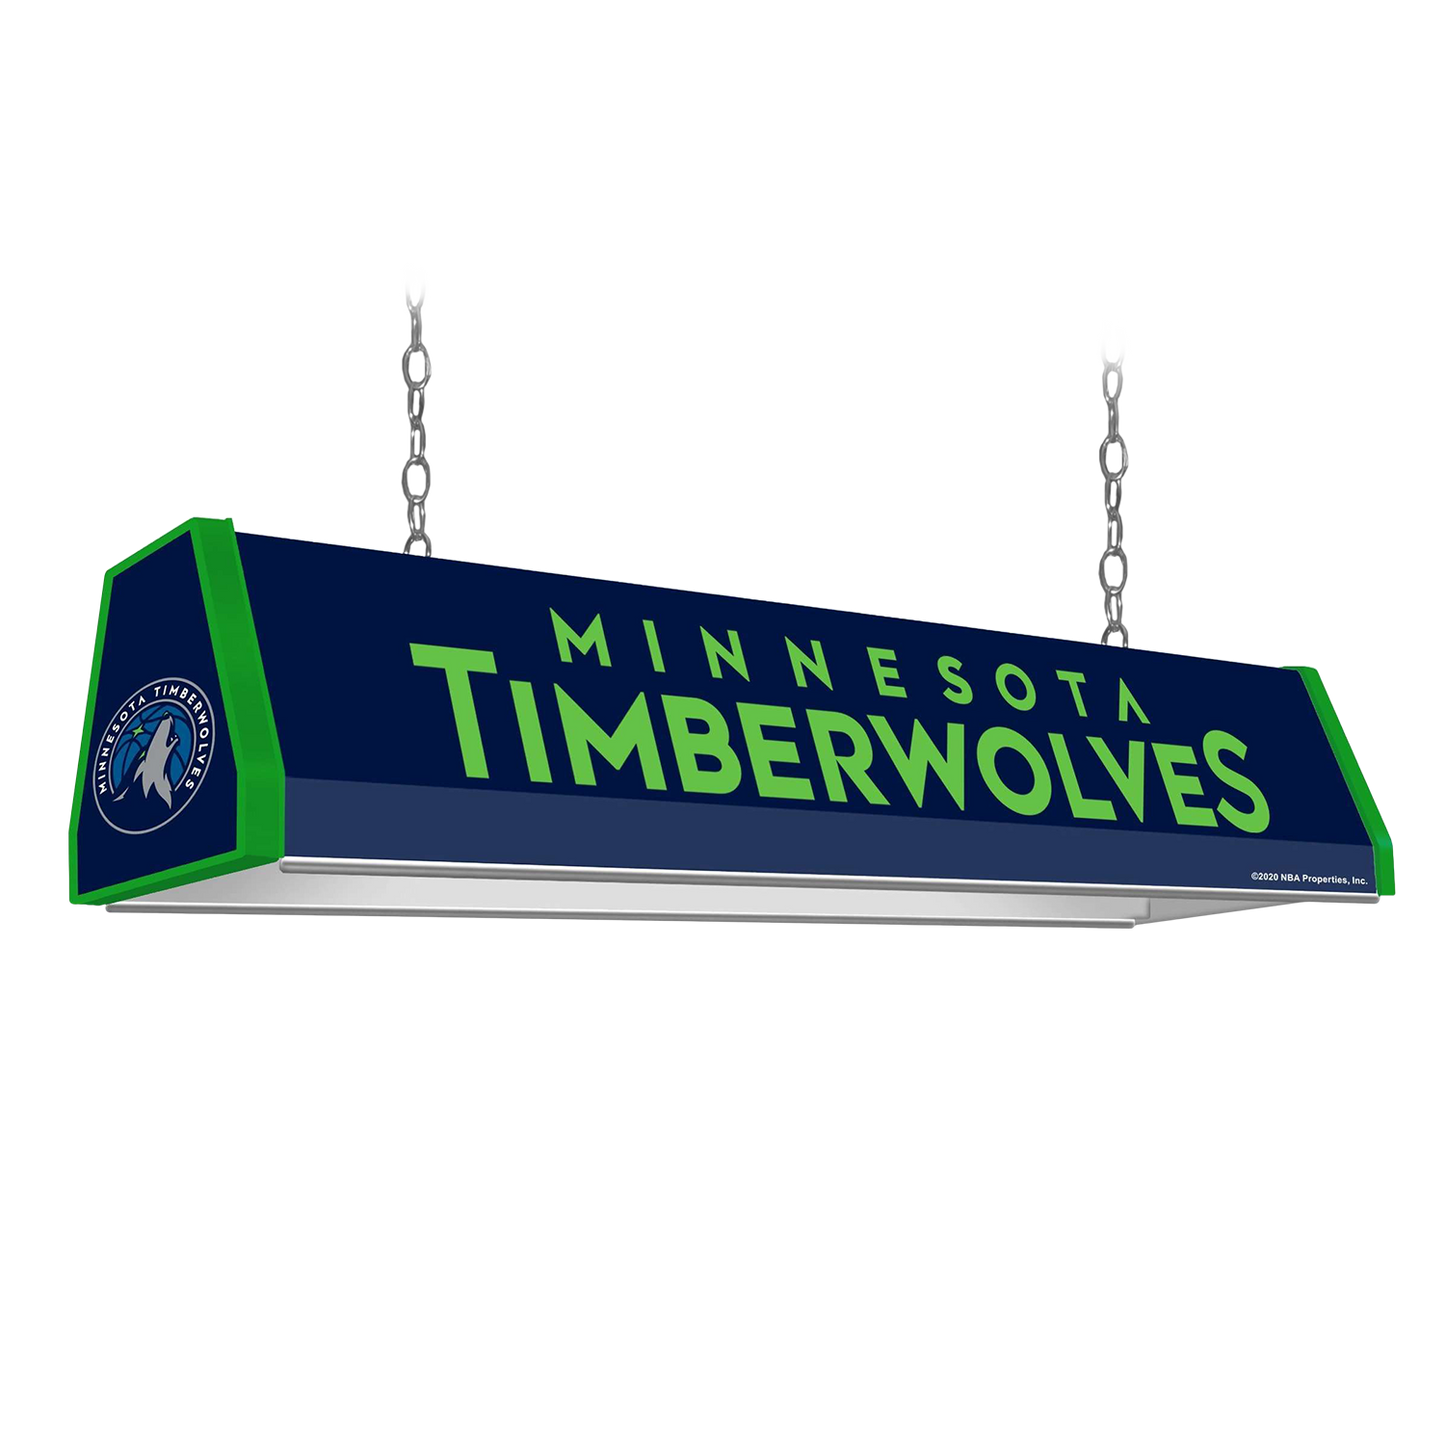 Minnesota Timberwolves: Standard Pool Table Light - The Fan-Brand